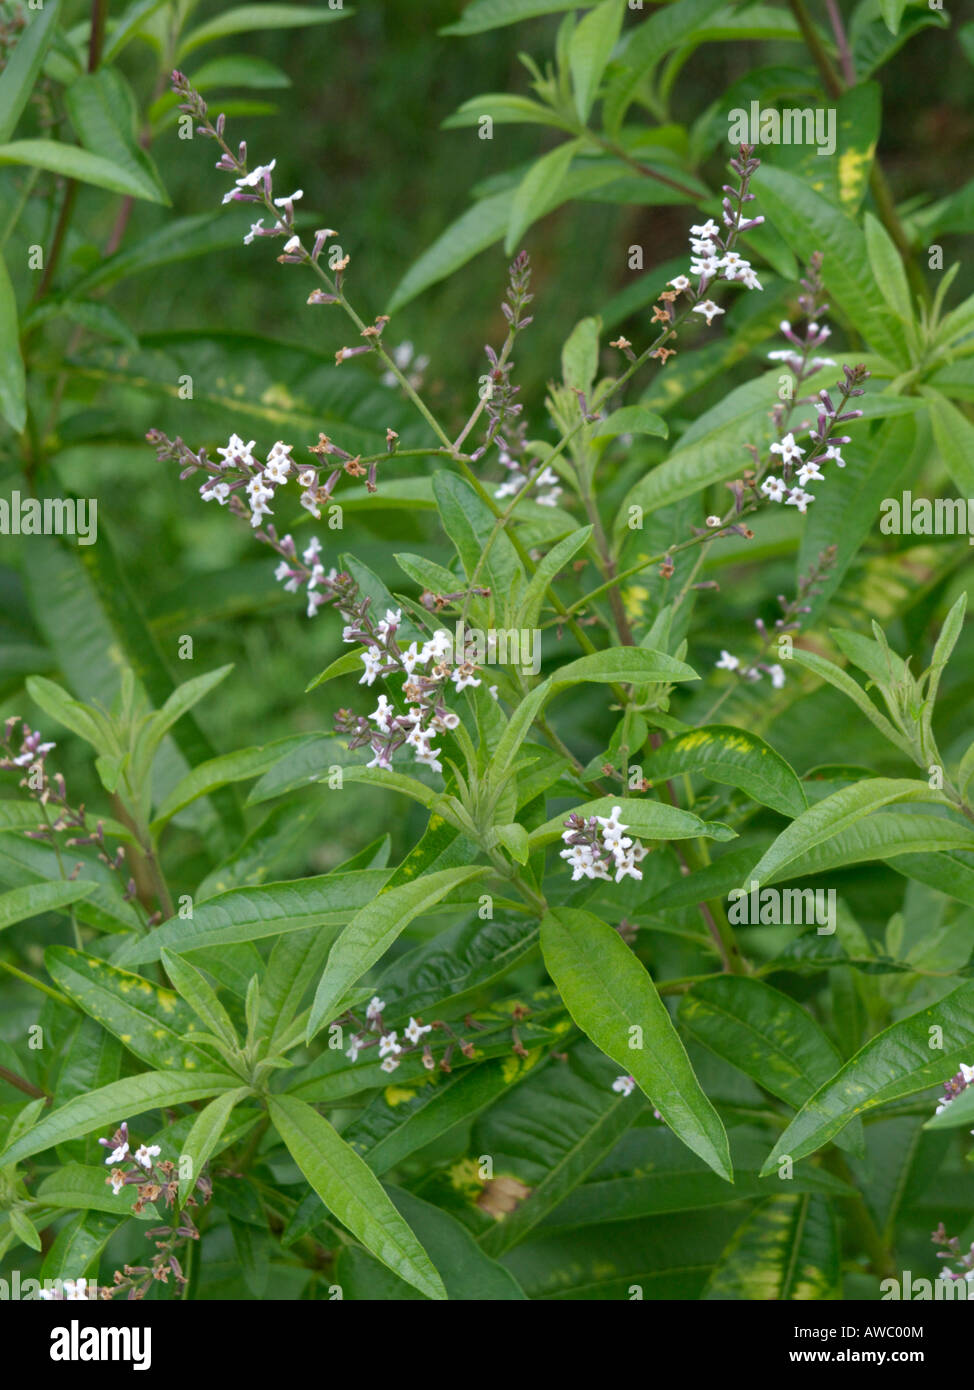 Images Of Lemon Verbena Alousia Trifolia : Lemon Verbena ...